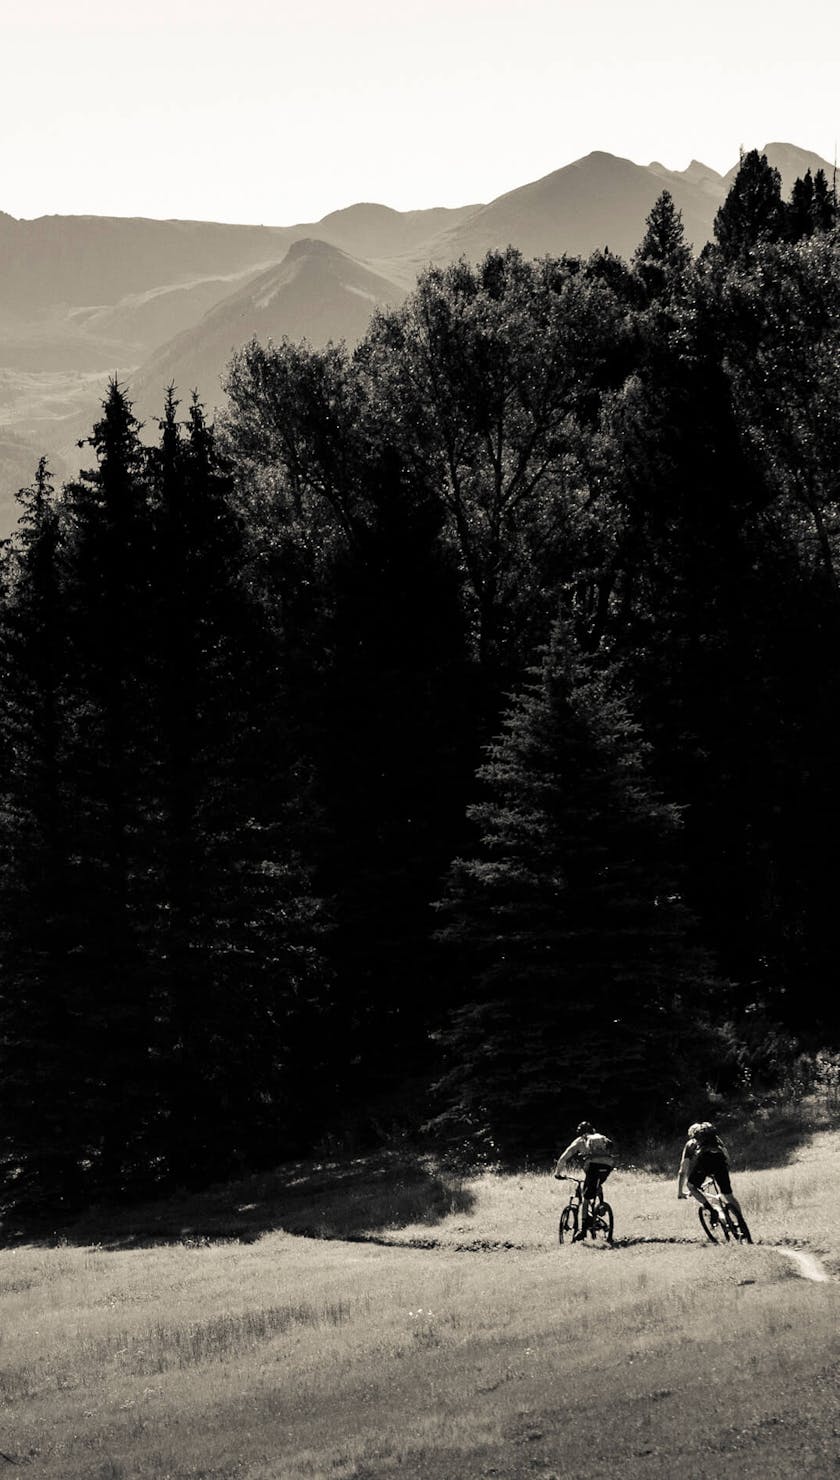 Two riders descending into the dark trees